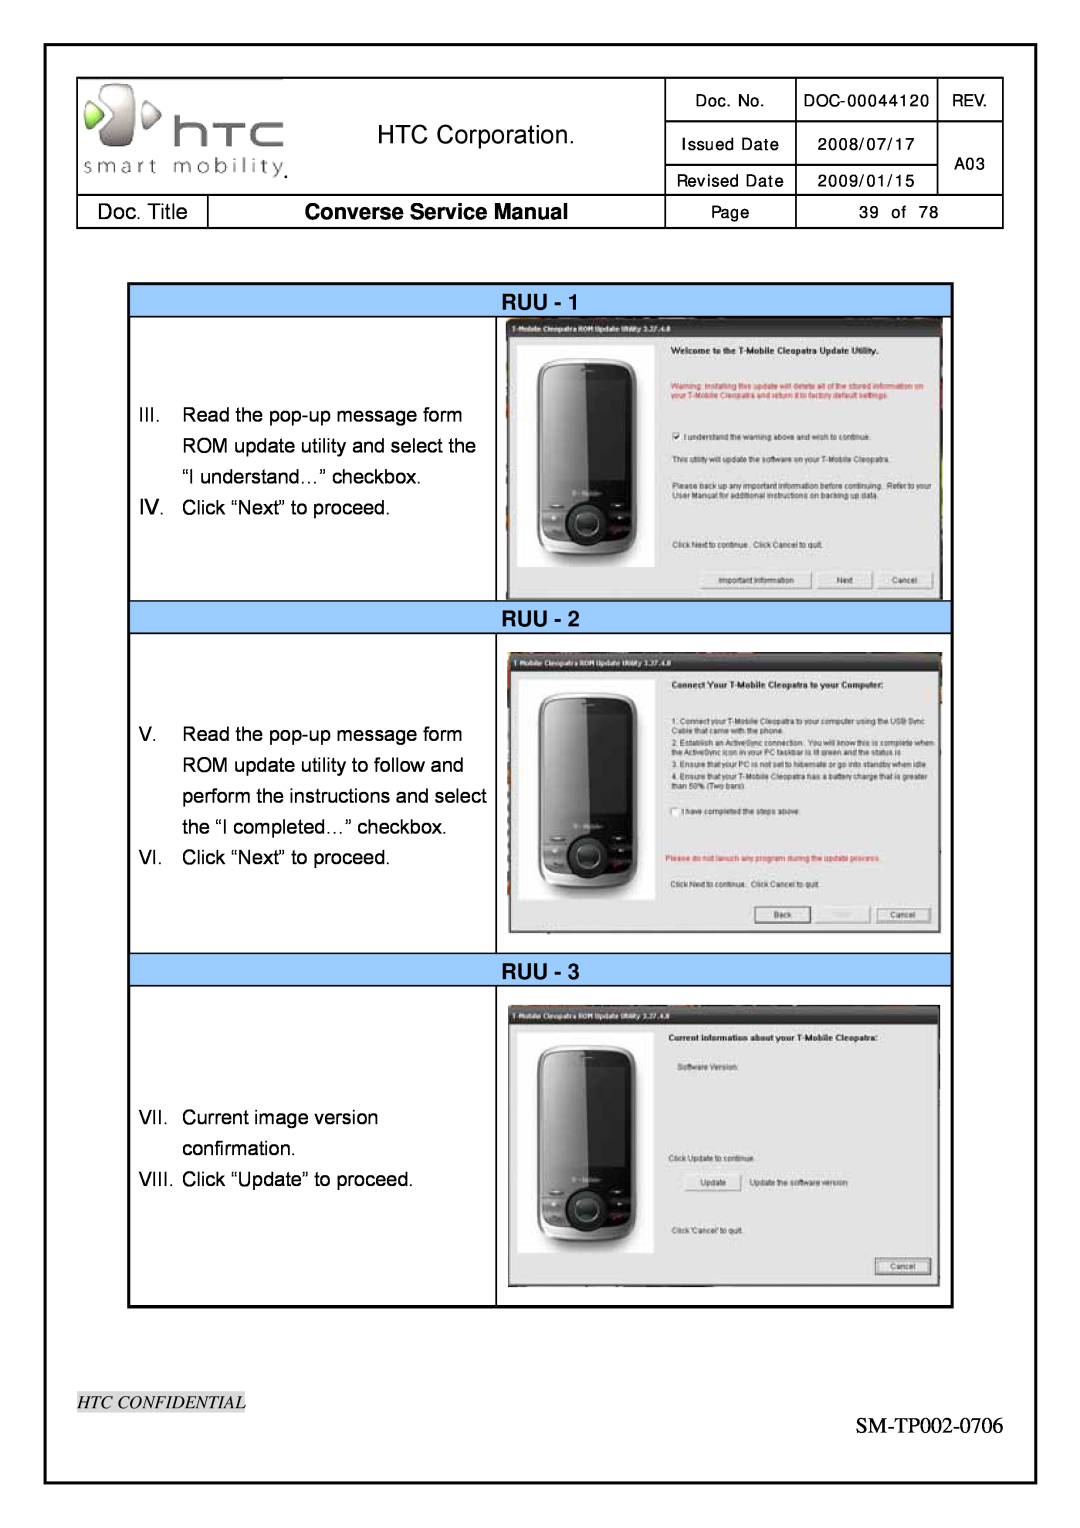 HTC SM-TP002-0706 service manual HTC Corporation, Converse Service Manual, III. Read the pop-up message form 